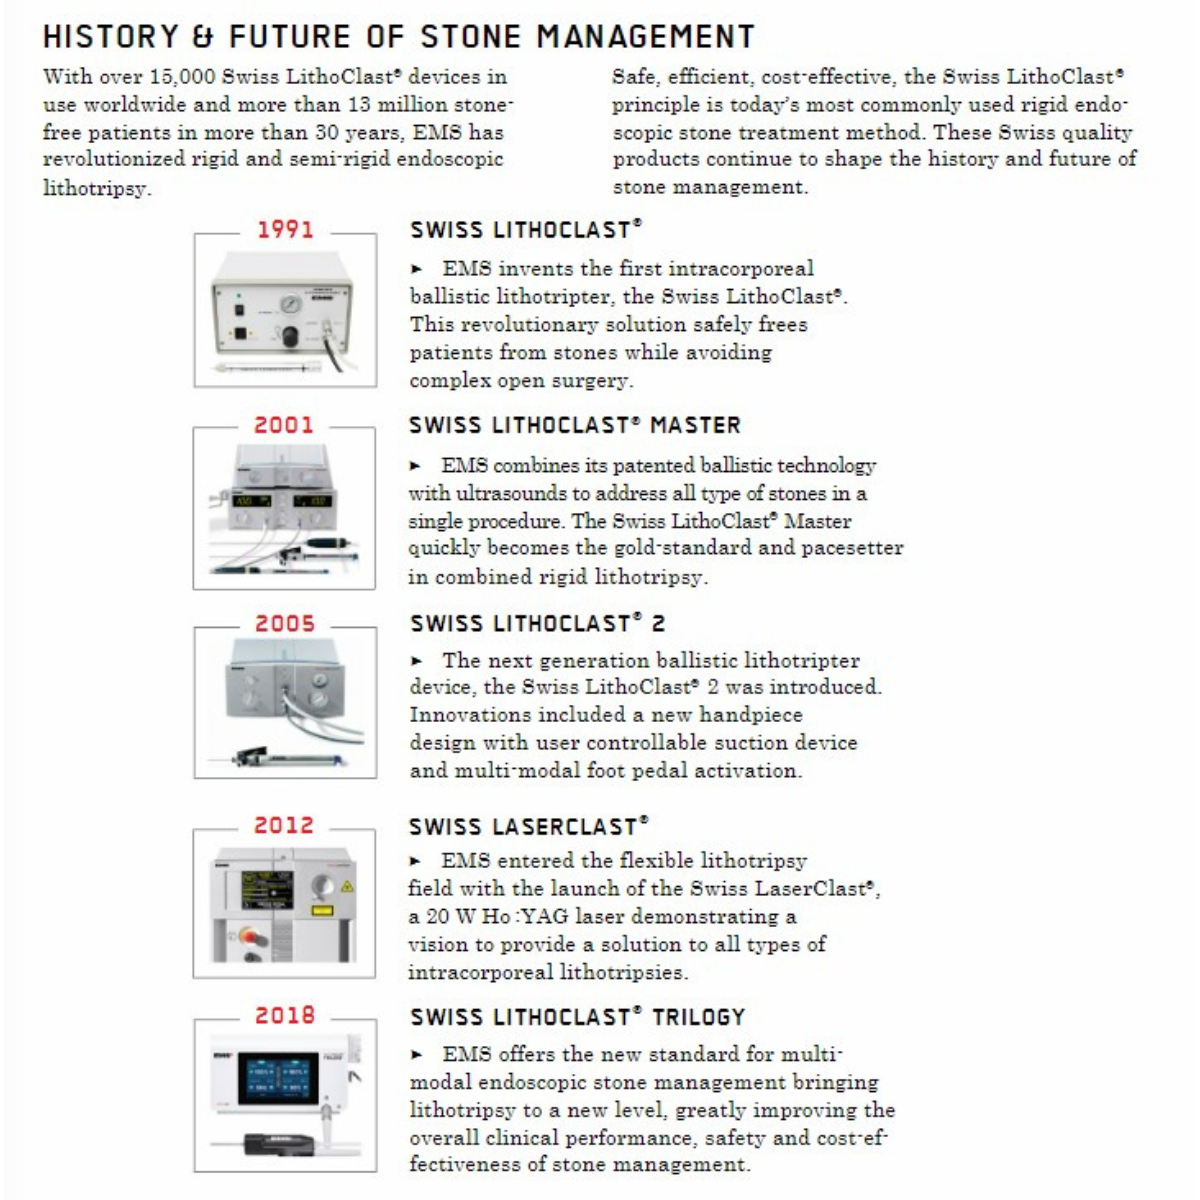 History & future of stone management